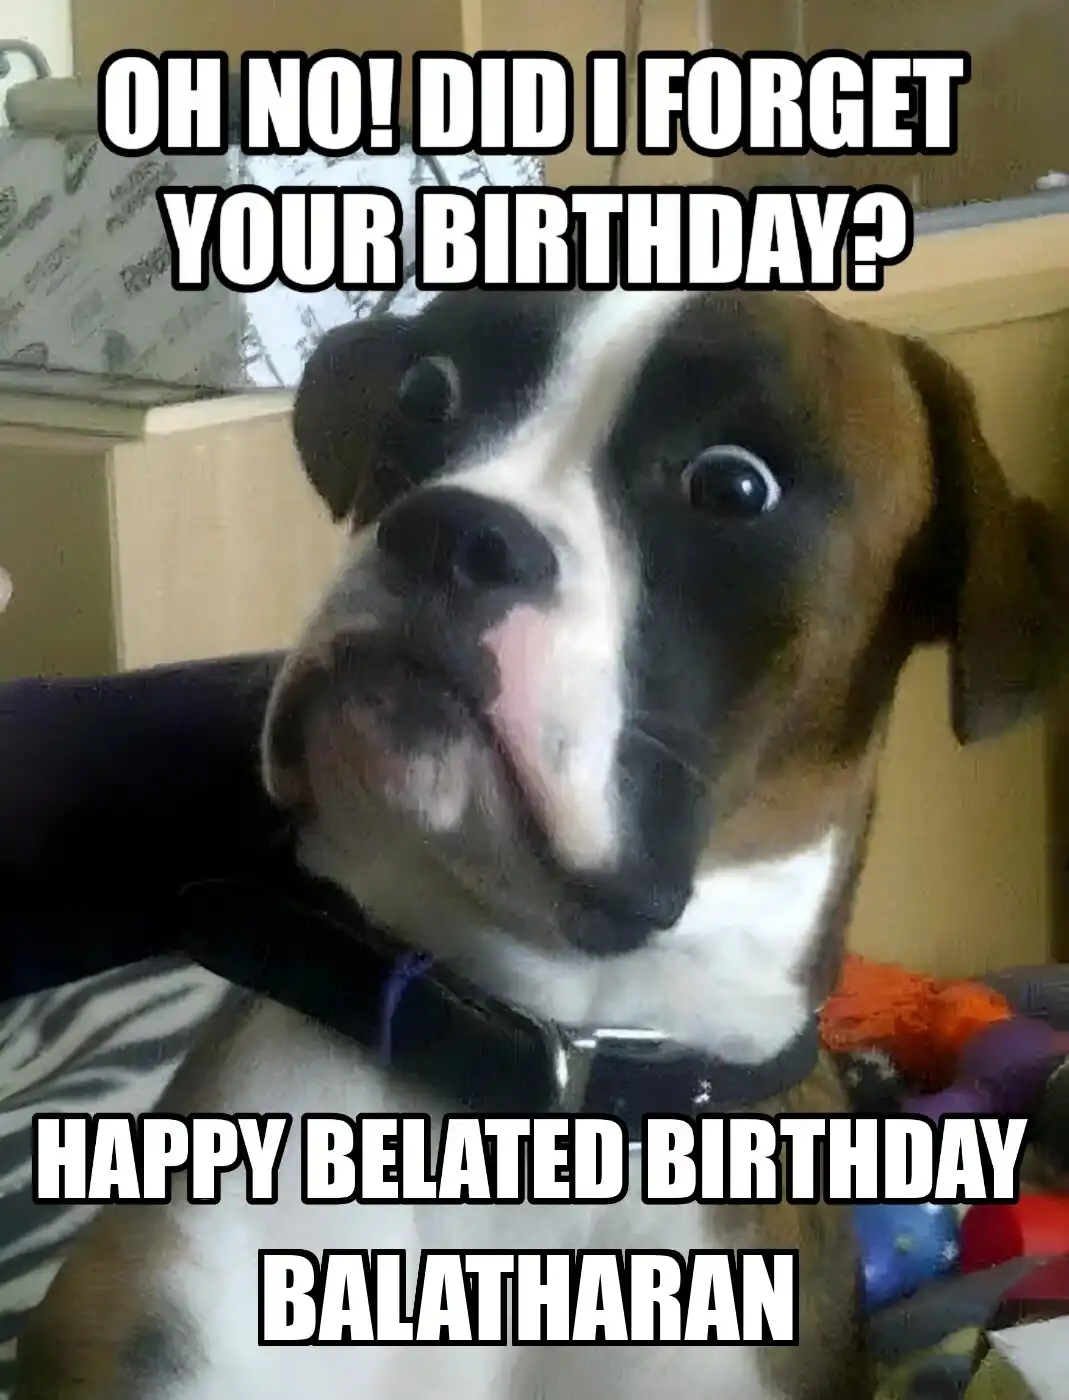 Happy Birthday Balatharan Did I Forget Your Birthday Meme